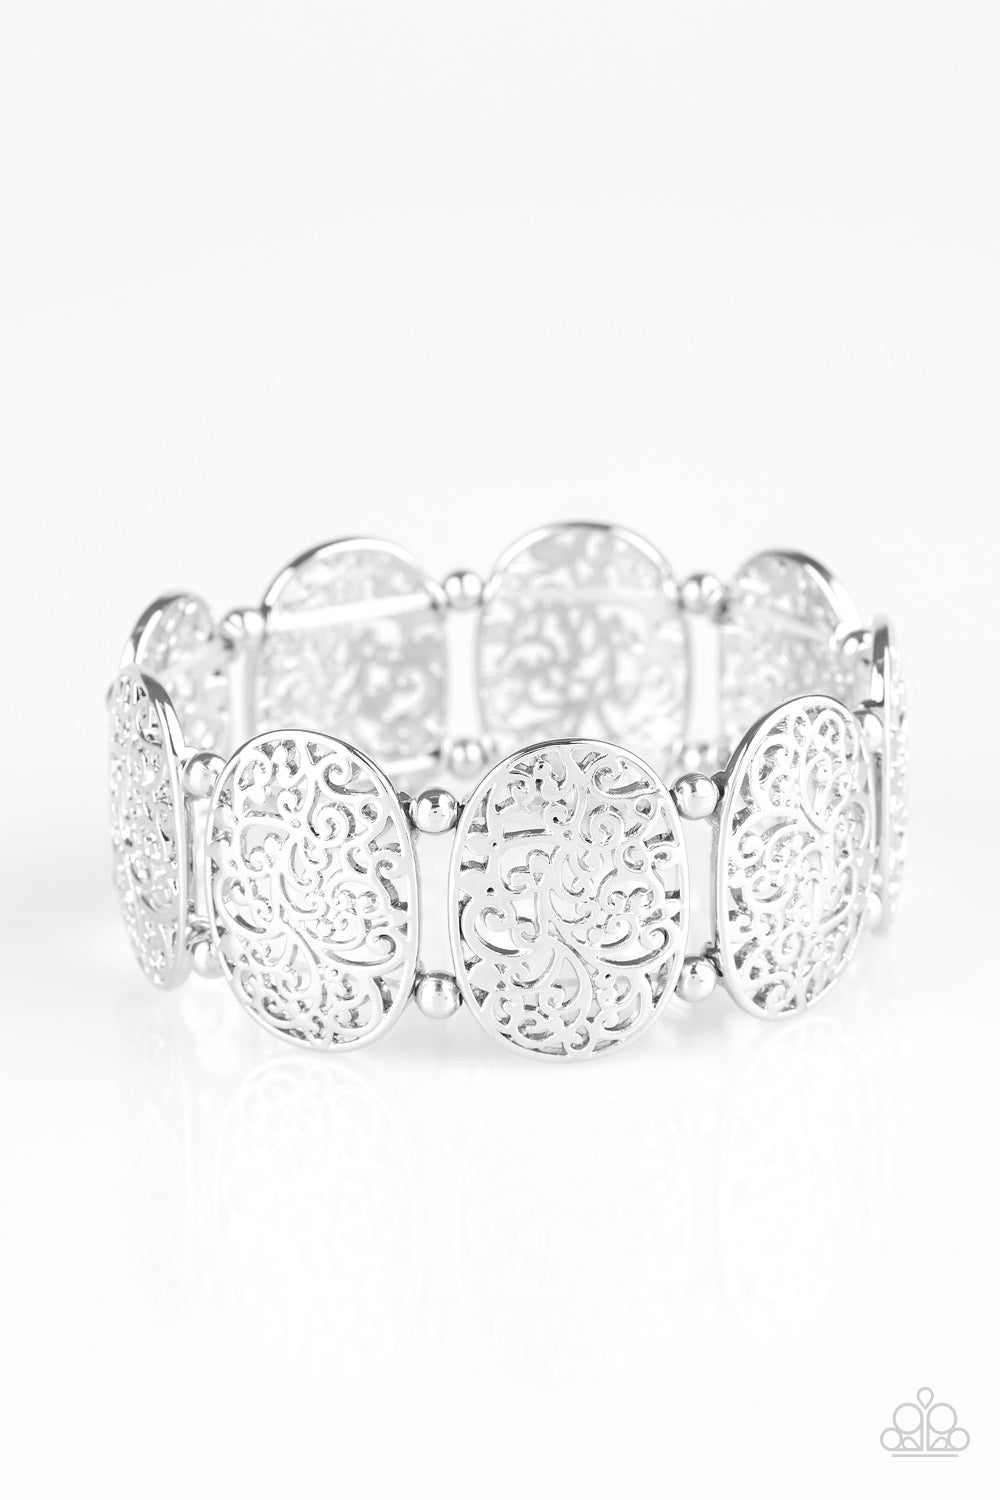 Paparazzi Everyday Elegance - Silver - High Sheen Vine Filigree - Stretchy Bracelet - $5 Jewelry With Ashley Swint